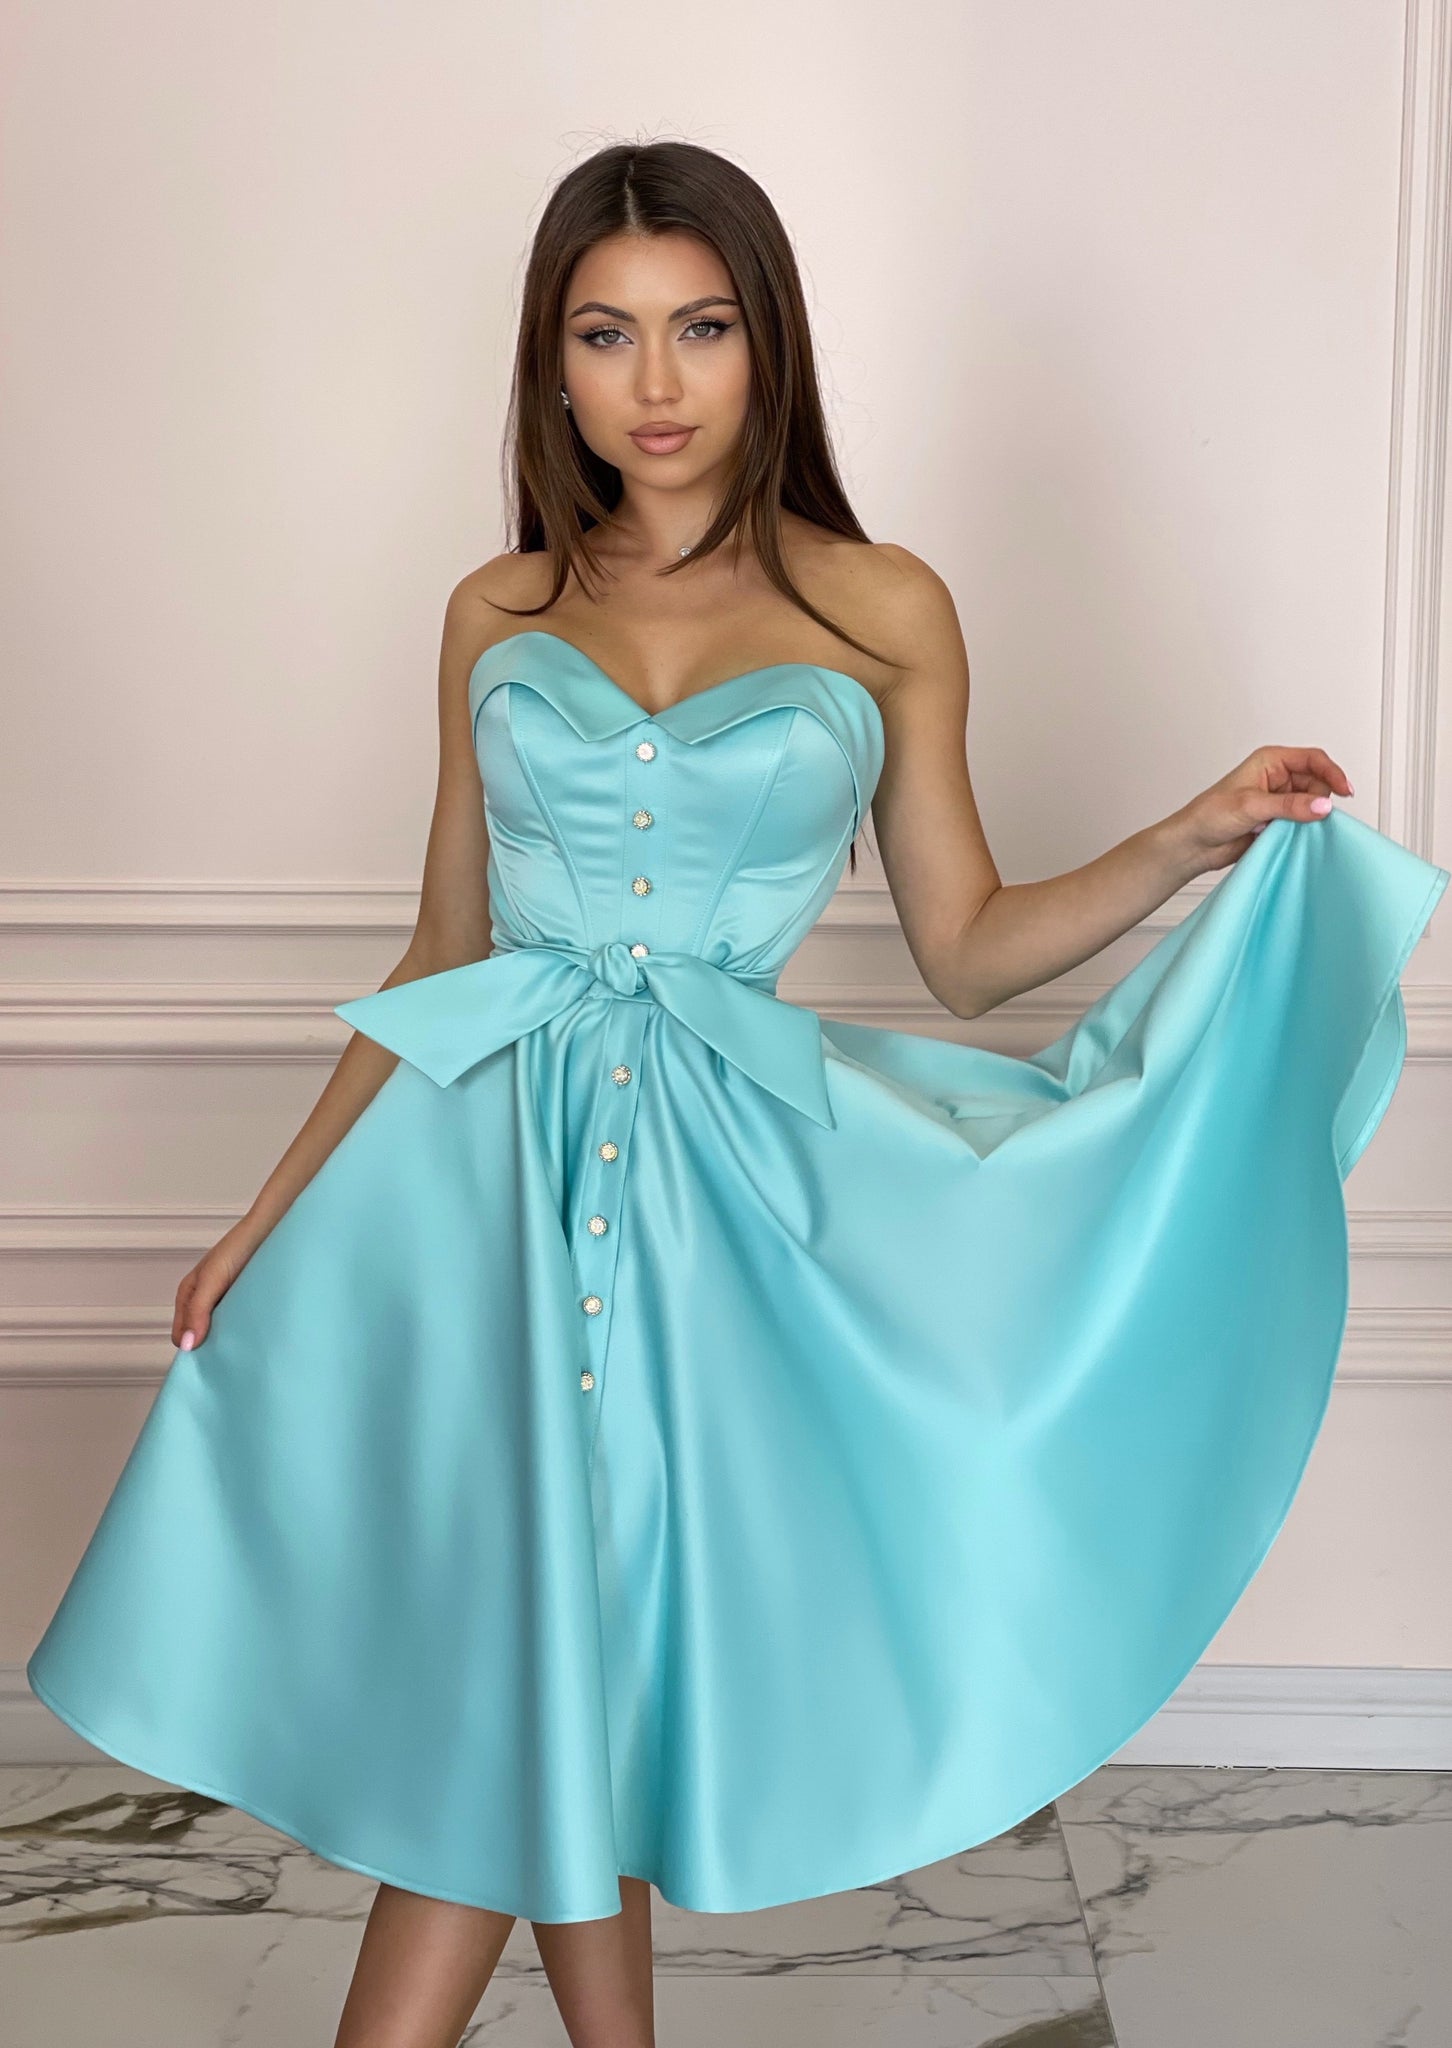 aqua blue dress